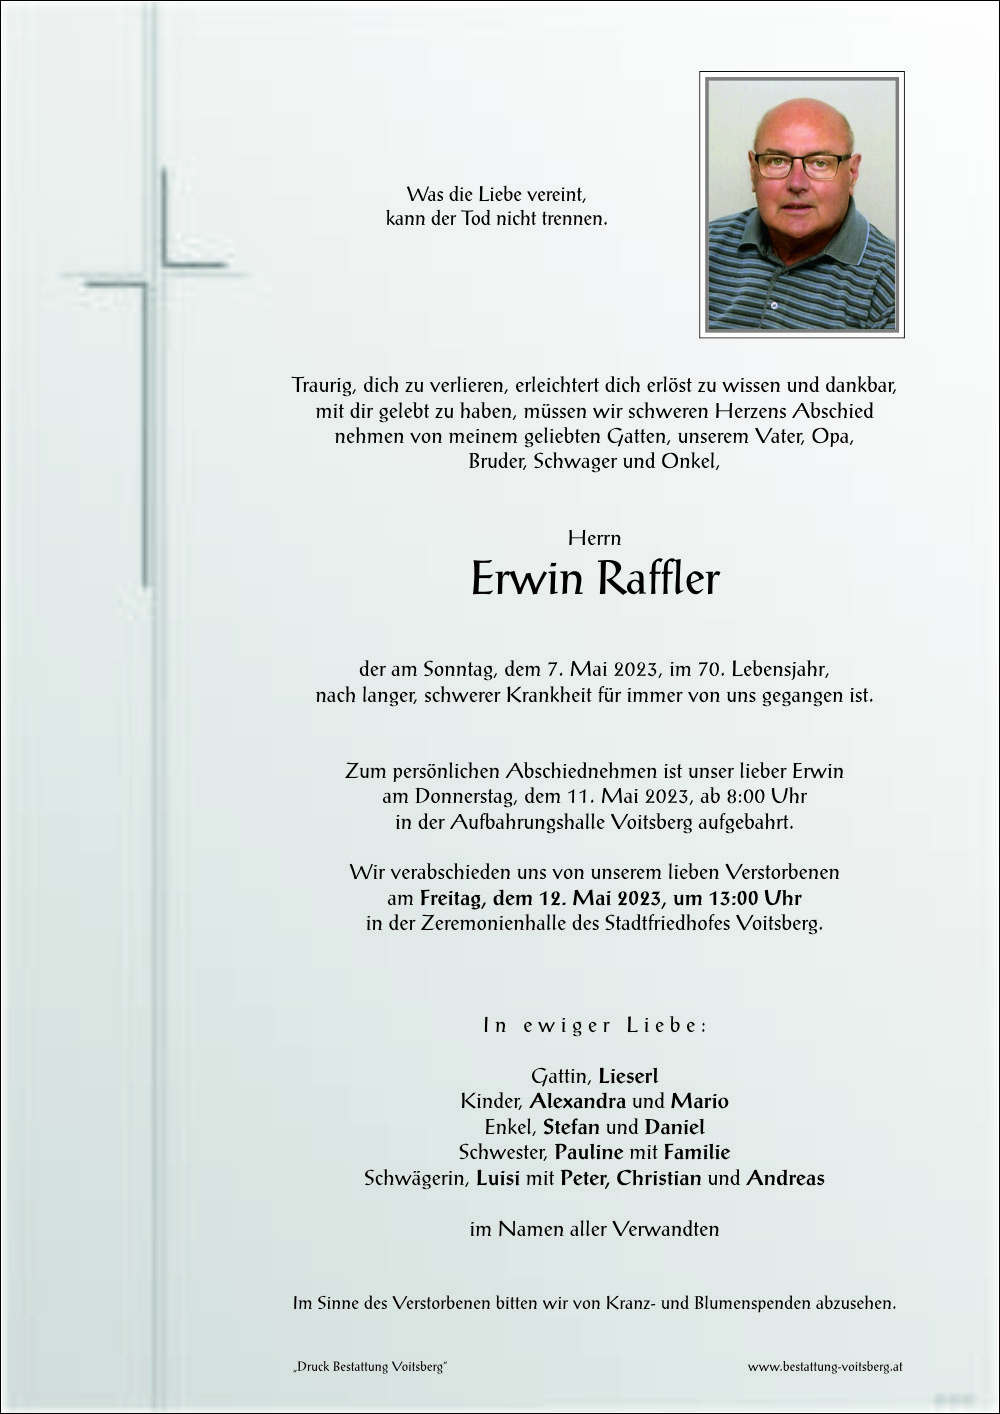 Erwin Raffler